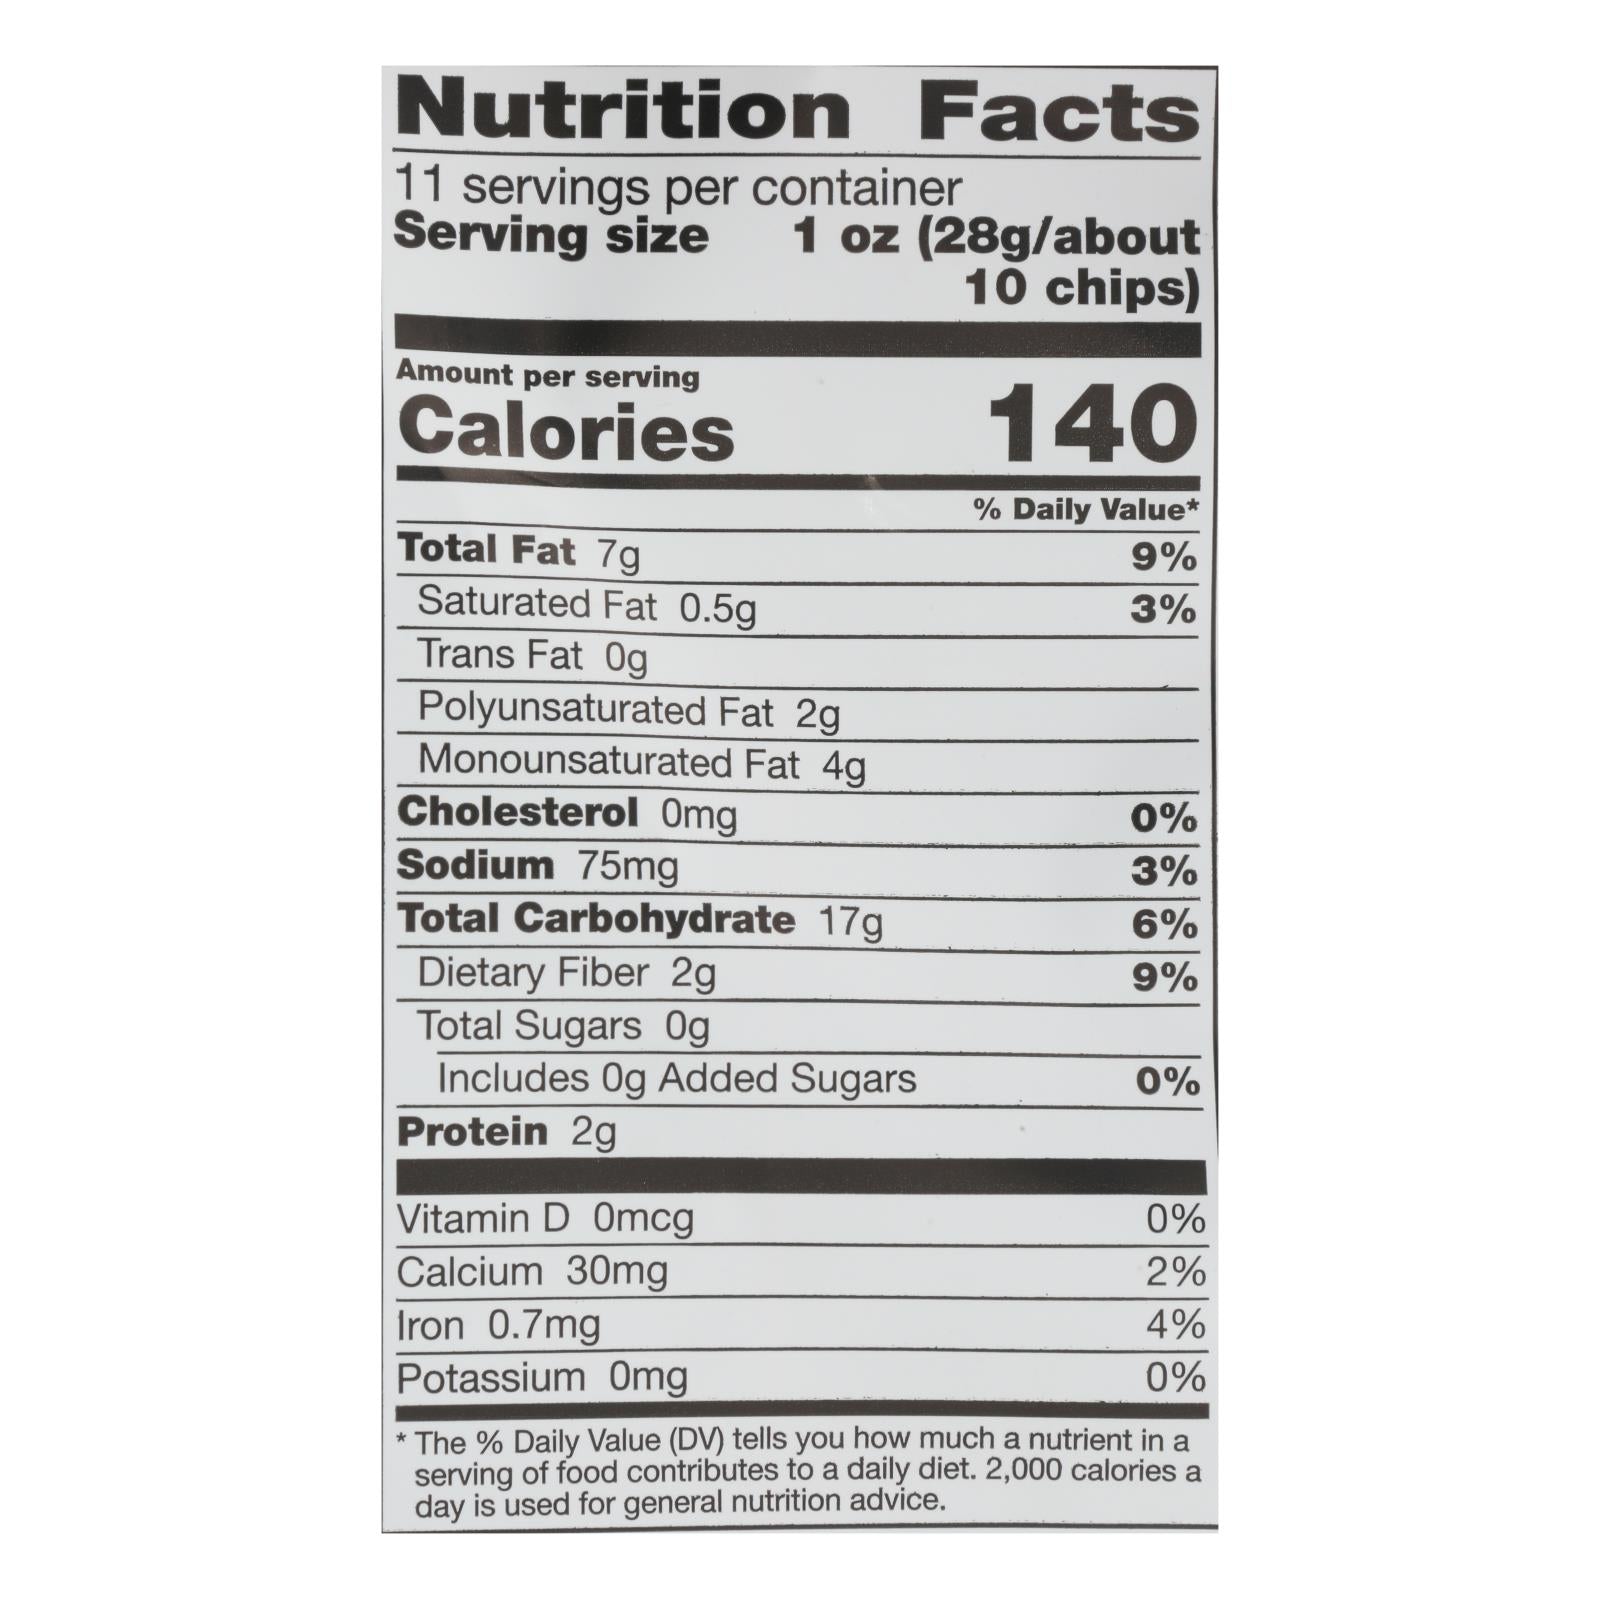 Food Should Taste Good Multigrain Tortilla Chips - Multigrain - Case Of 12 - 11 Oz.